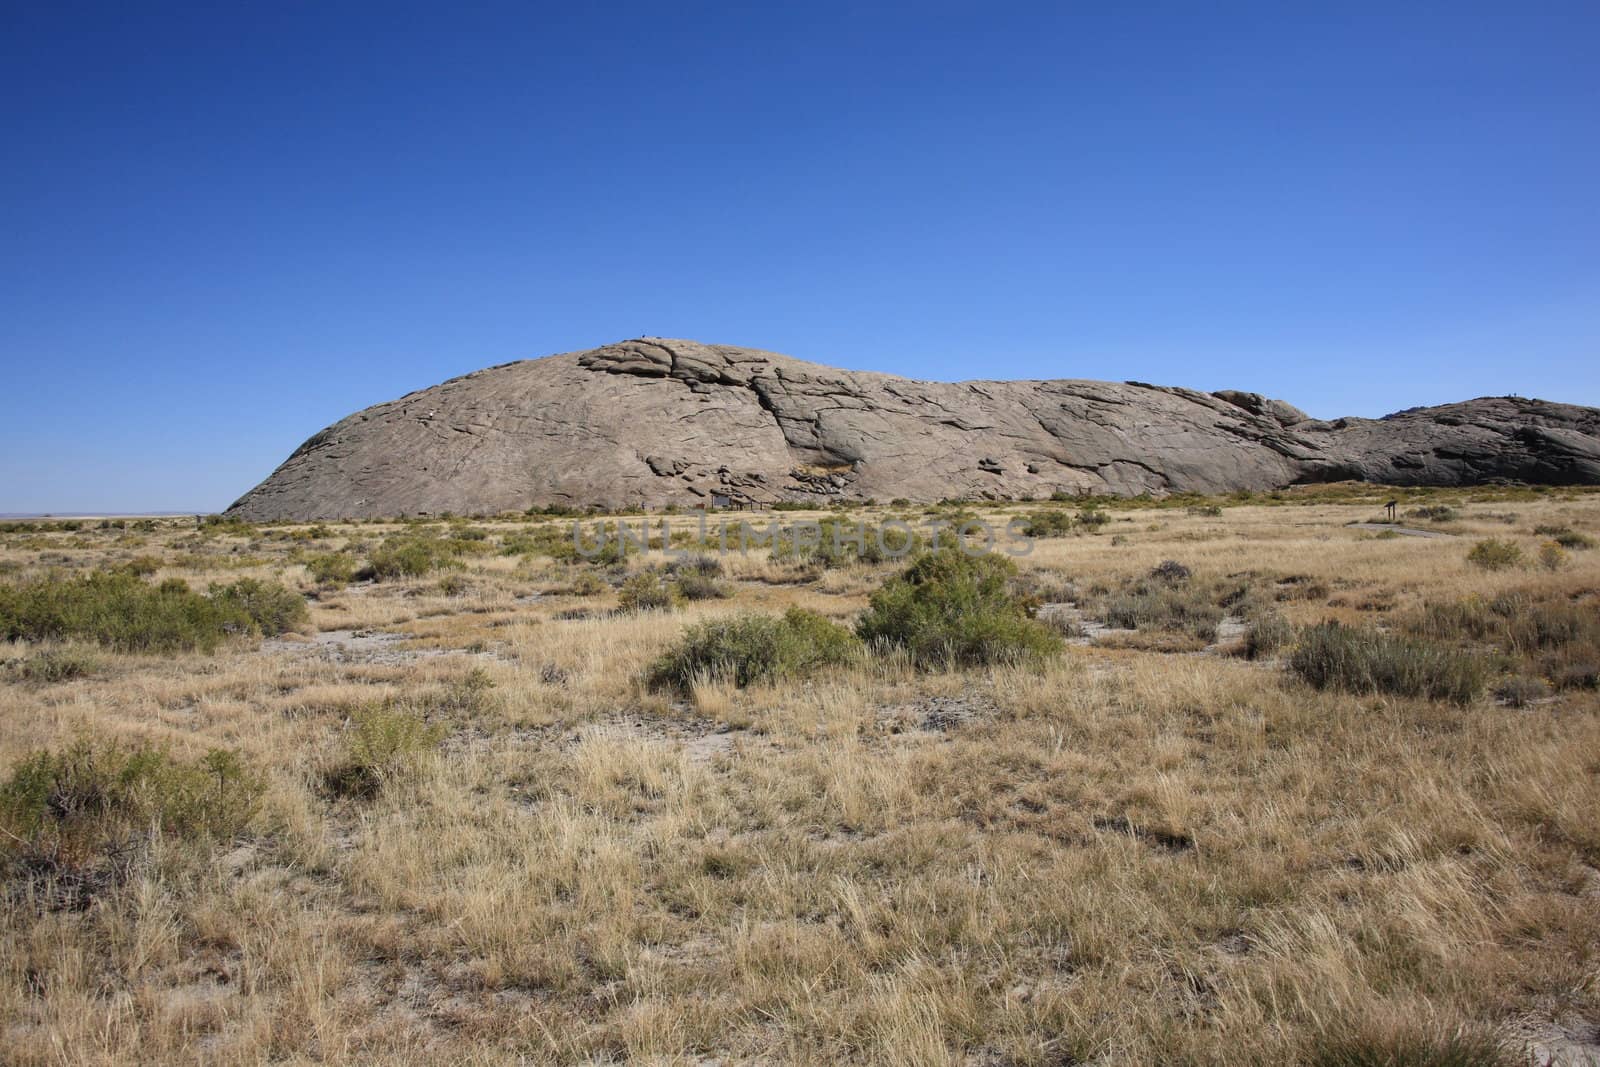 Large granite landmark rock along the Oregon Trail in Wyoming.